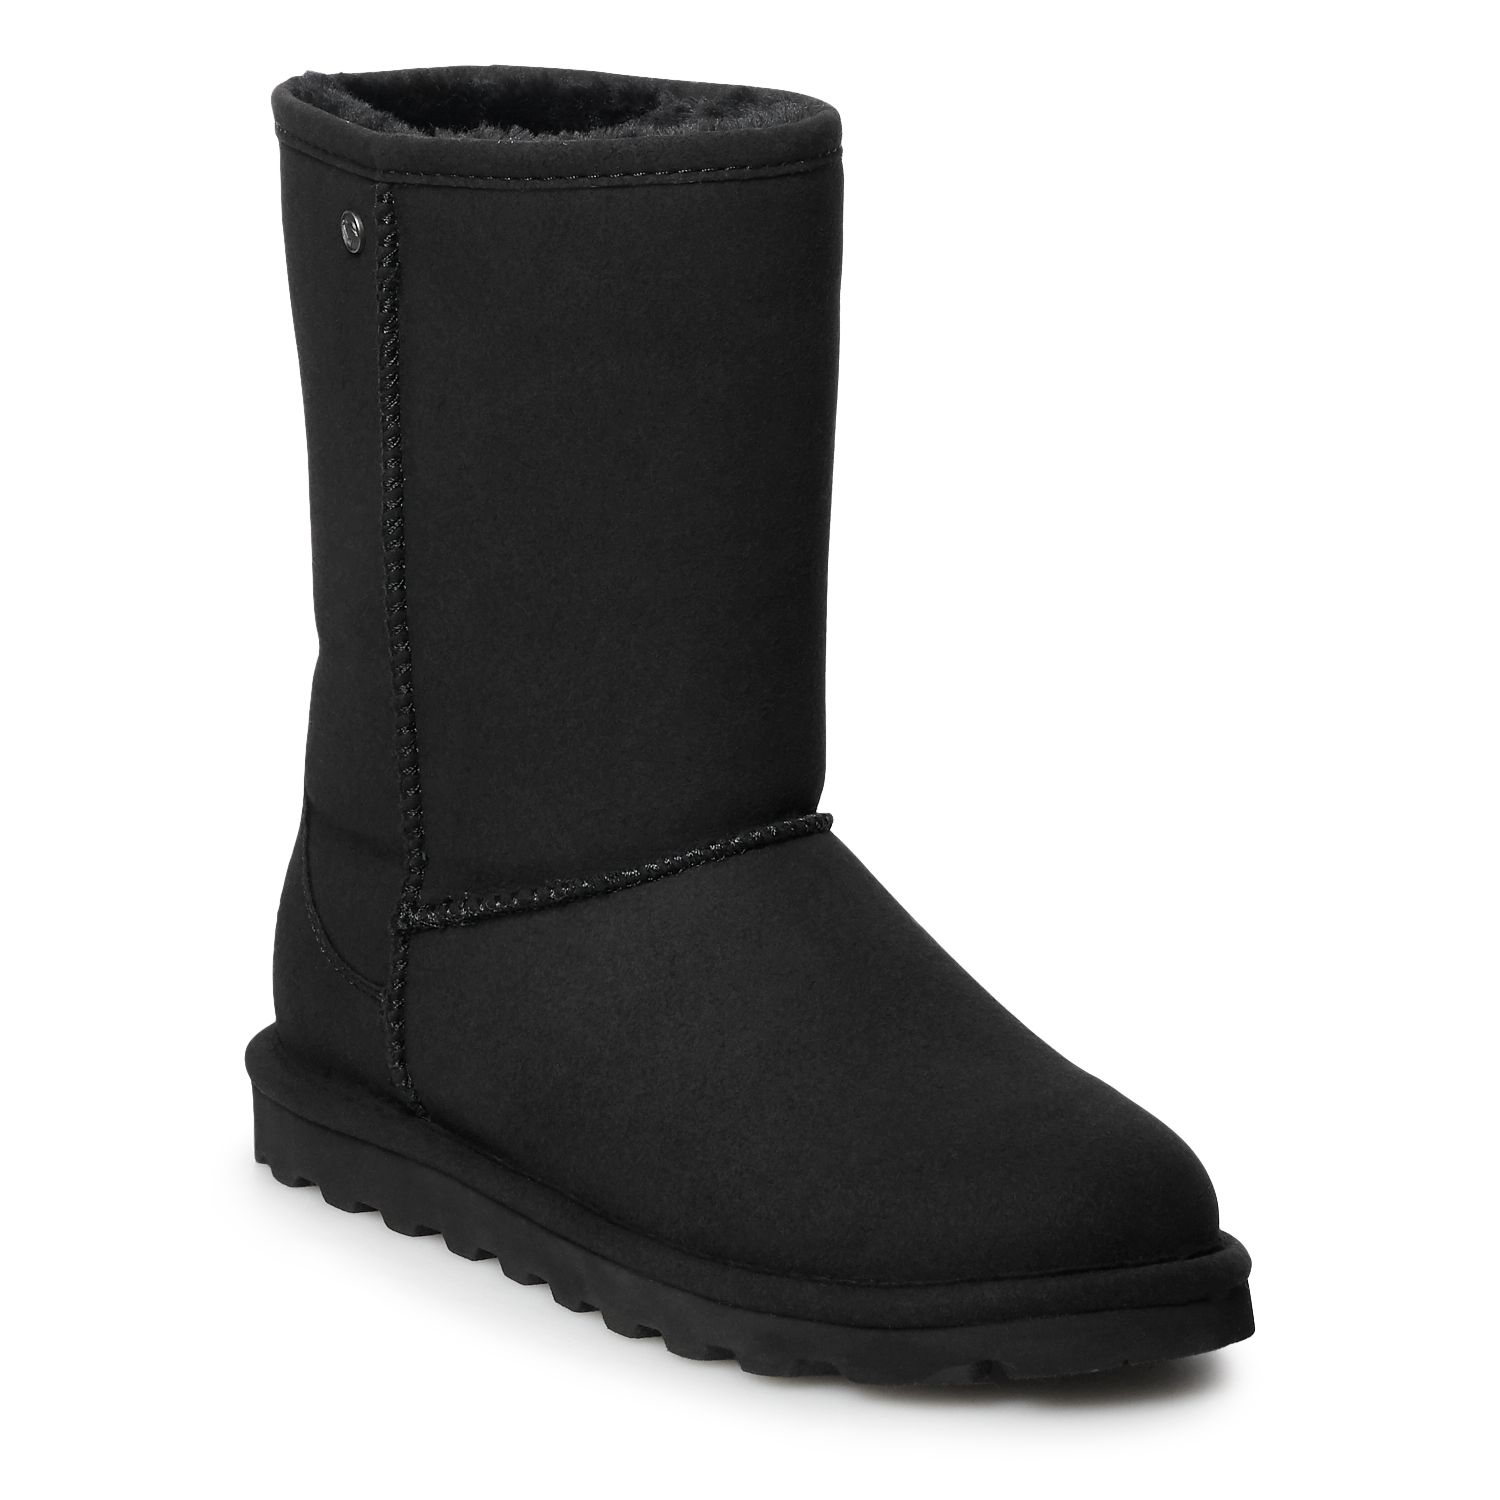 black friday boot sale online